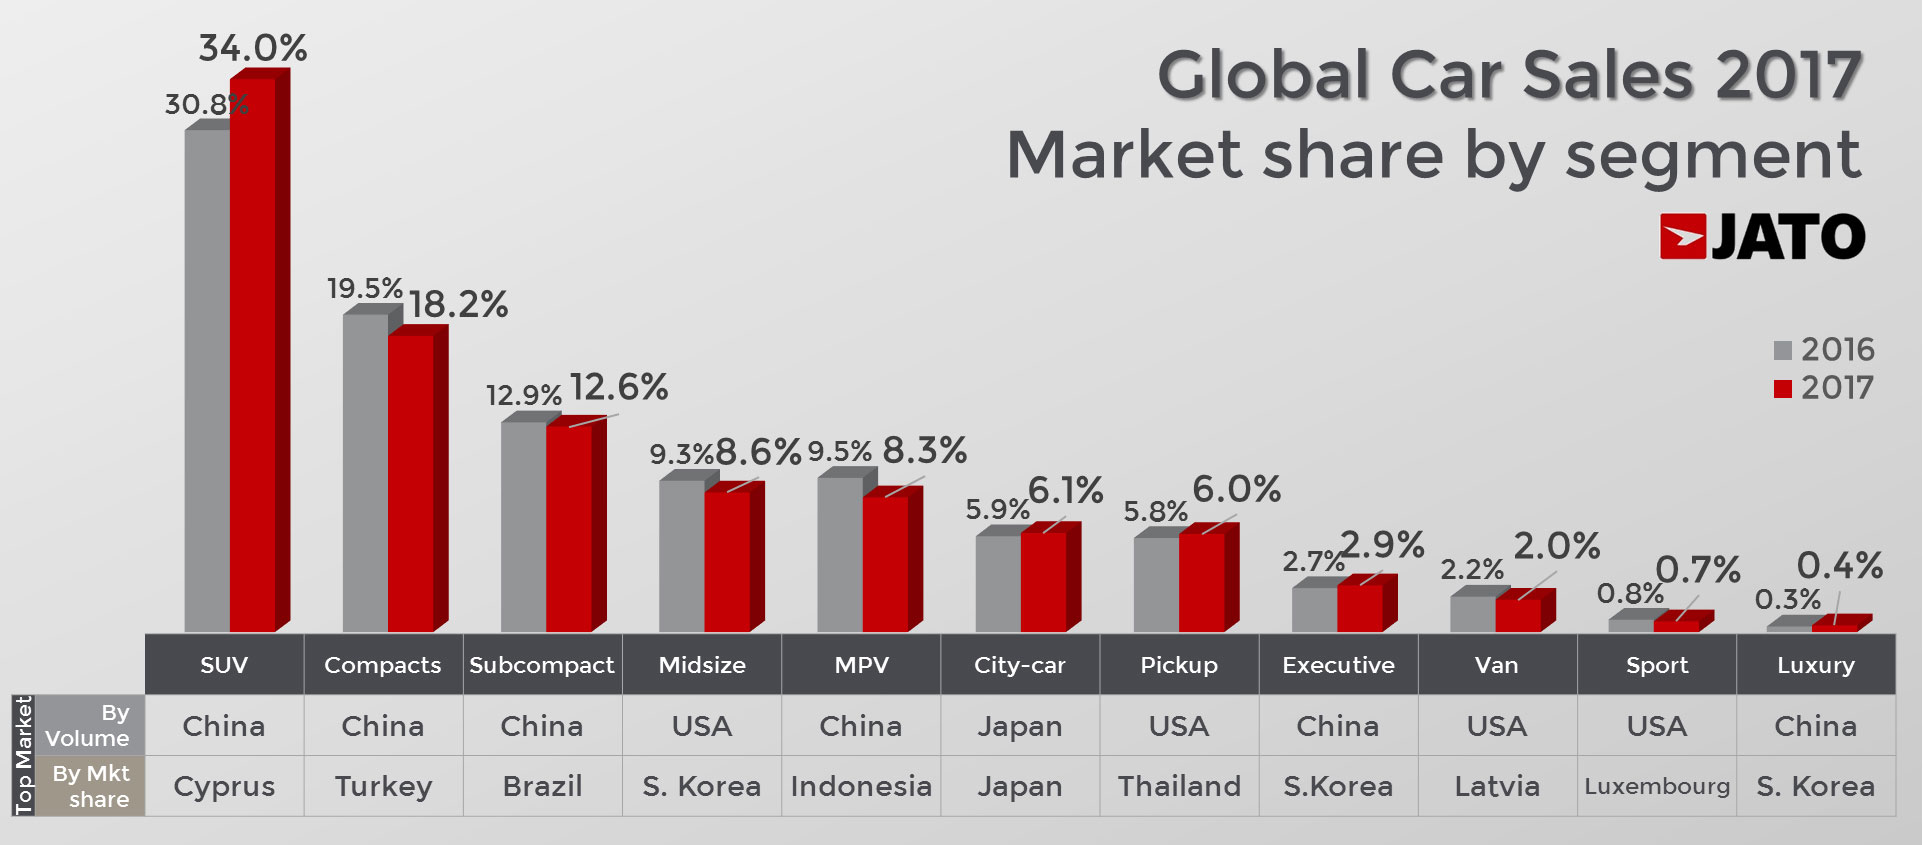 global city auto sales inc